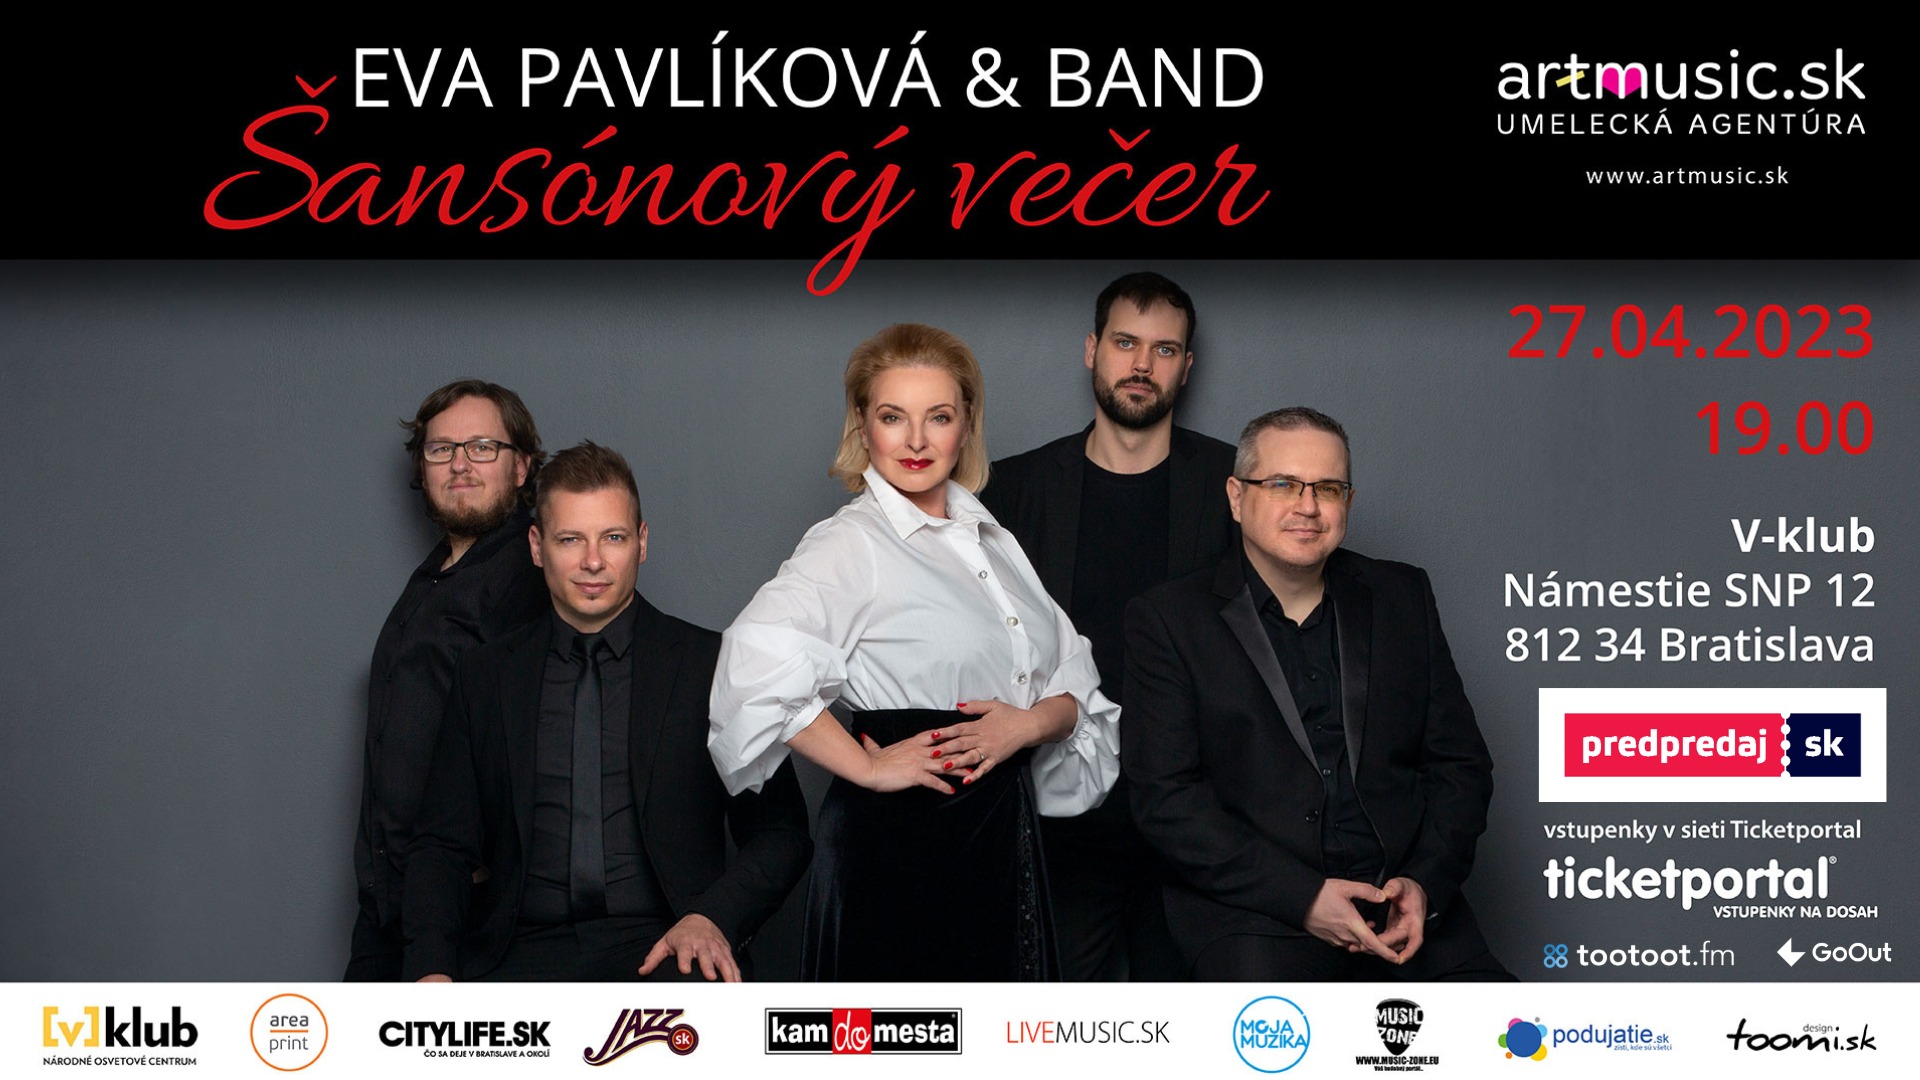 Eva Pavlíková & Band - Šansónový večer